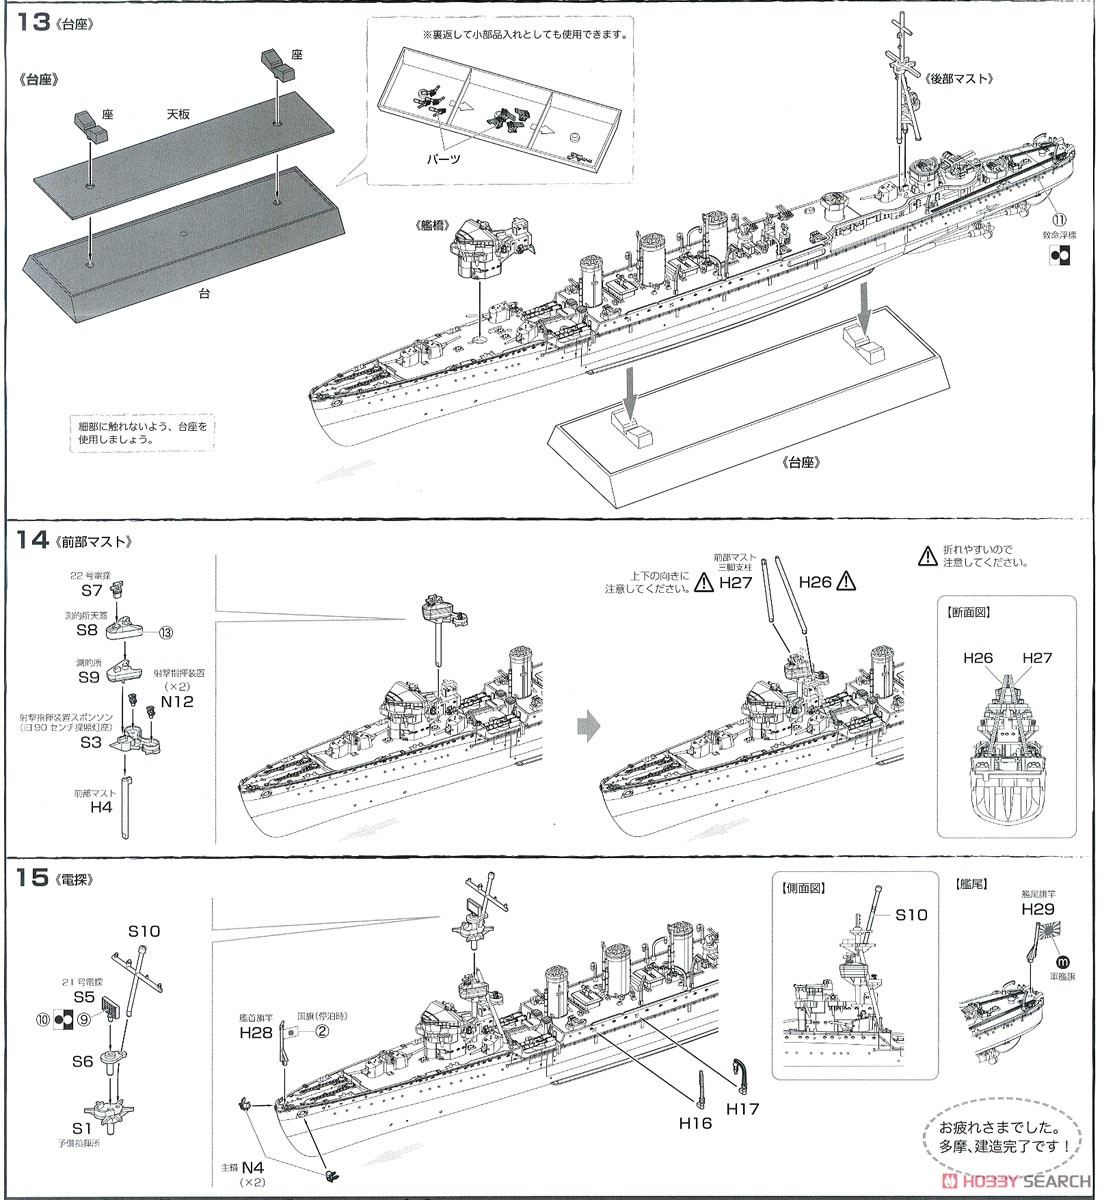 日本海軍軽巡洋艦 多摩 昭和19年/捷一号作戦 (プラモデル) 設計図4